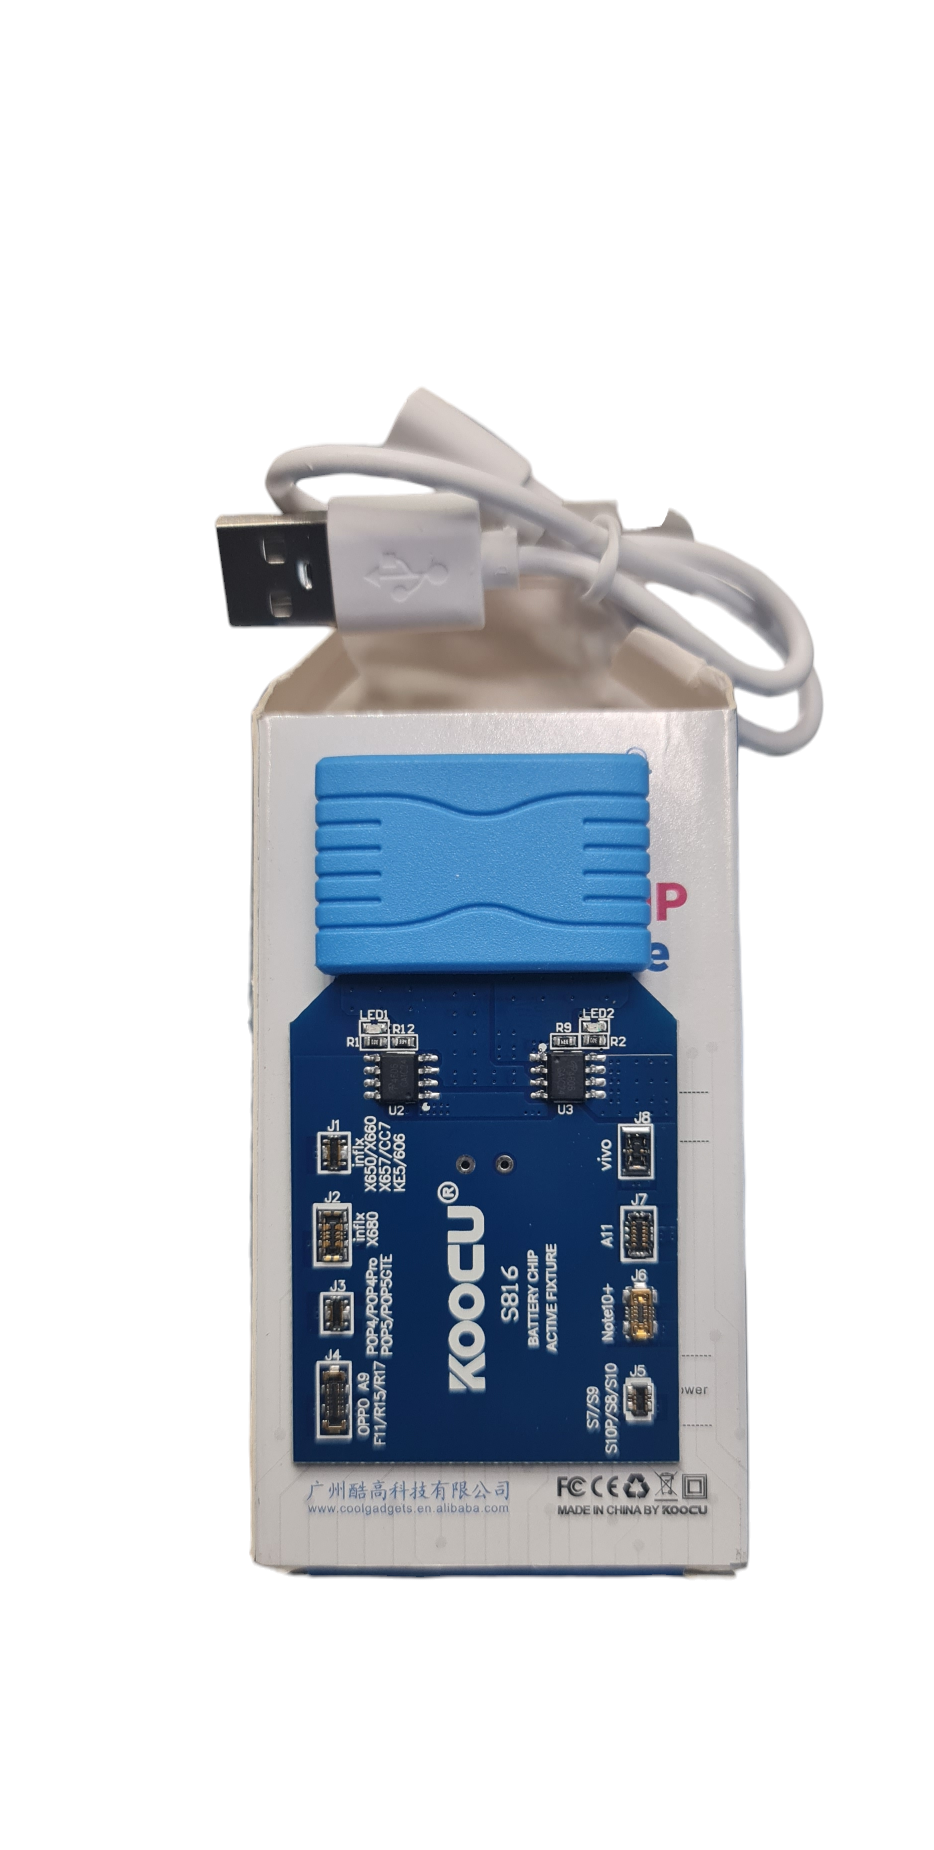 Koocu S816 Universal Direct Battery Charger (For OPPO, Vivo, Tecno, Samsung, Infinix, Itel Phones)